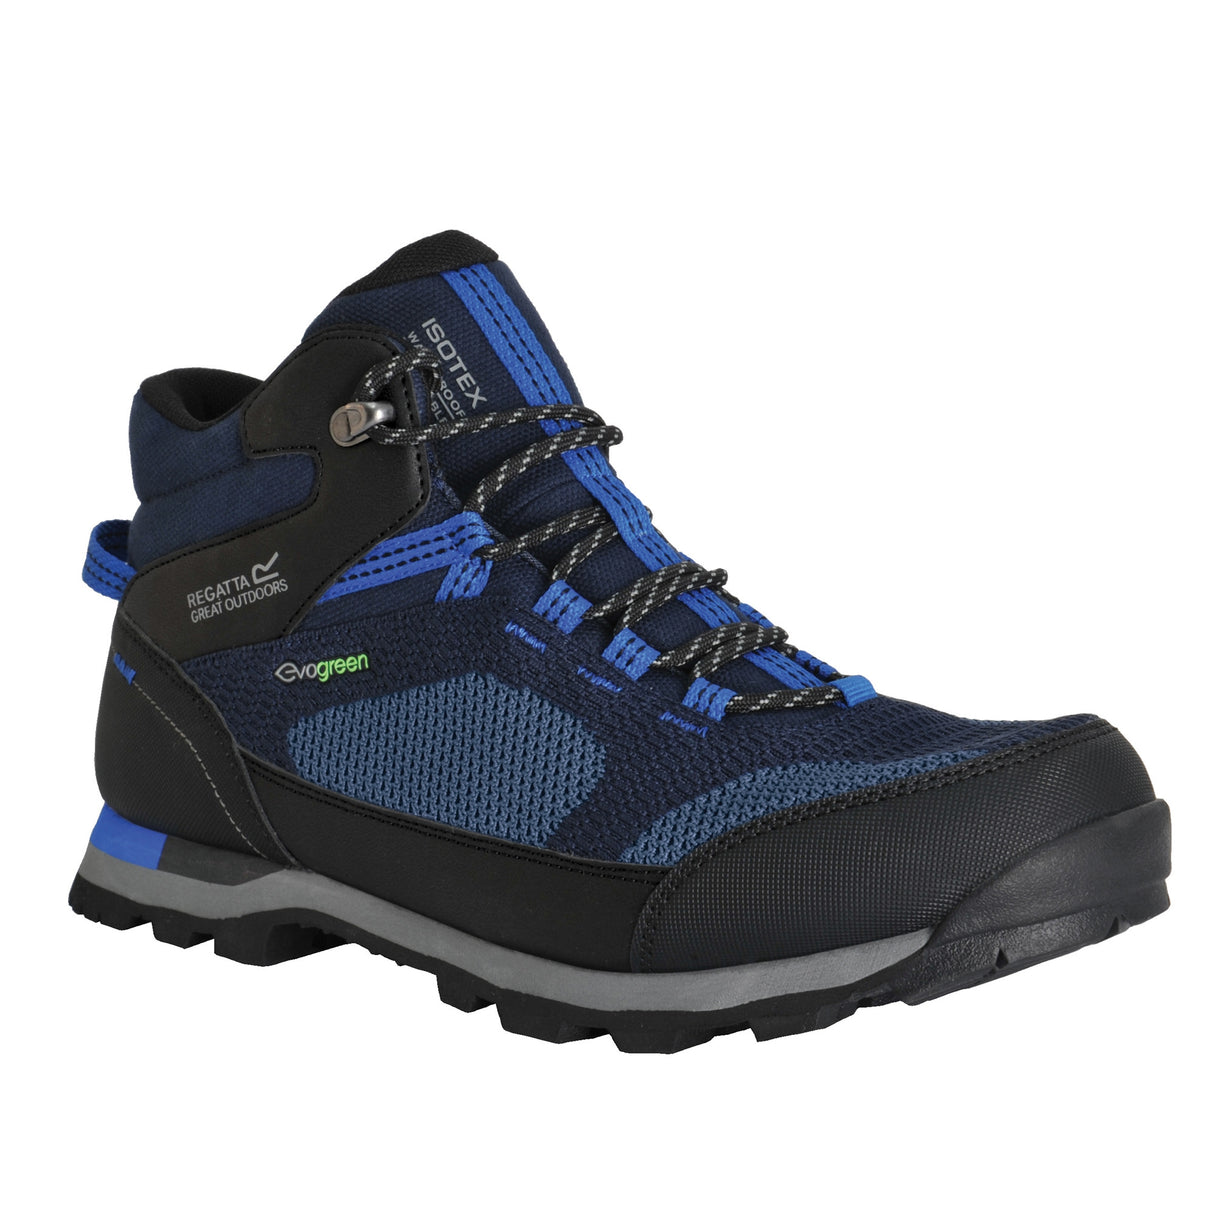 Regatta Blackthorn Evo Waterproof Walking Hiking Boots - Navy/Blue